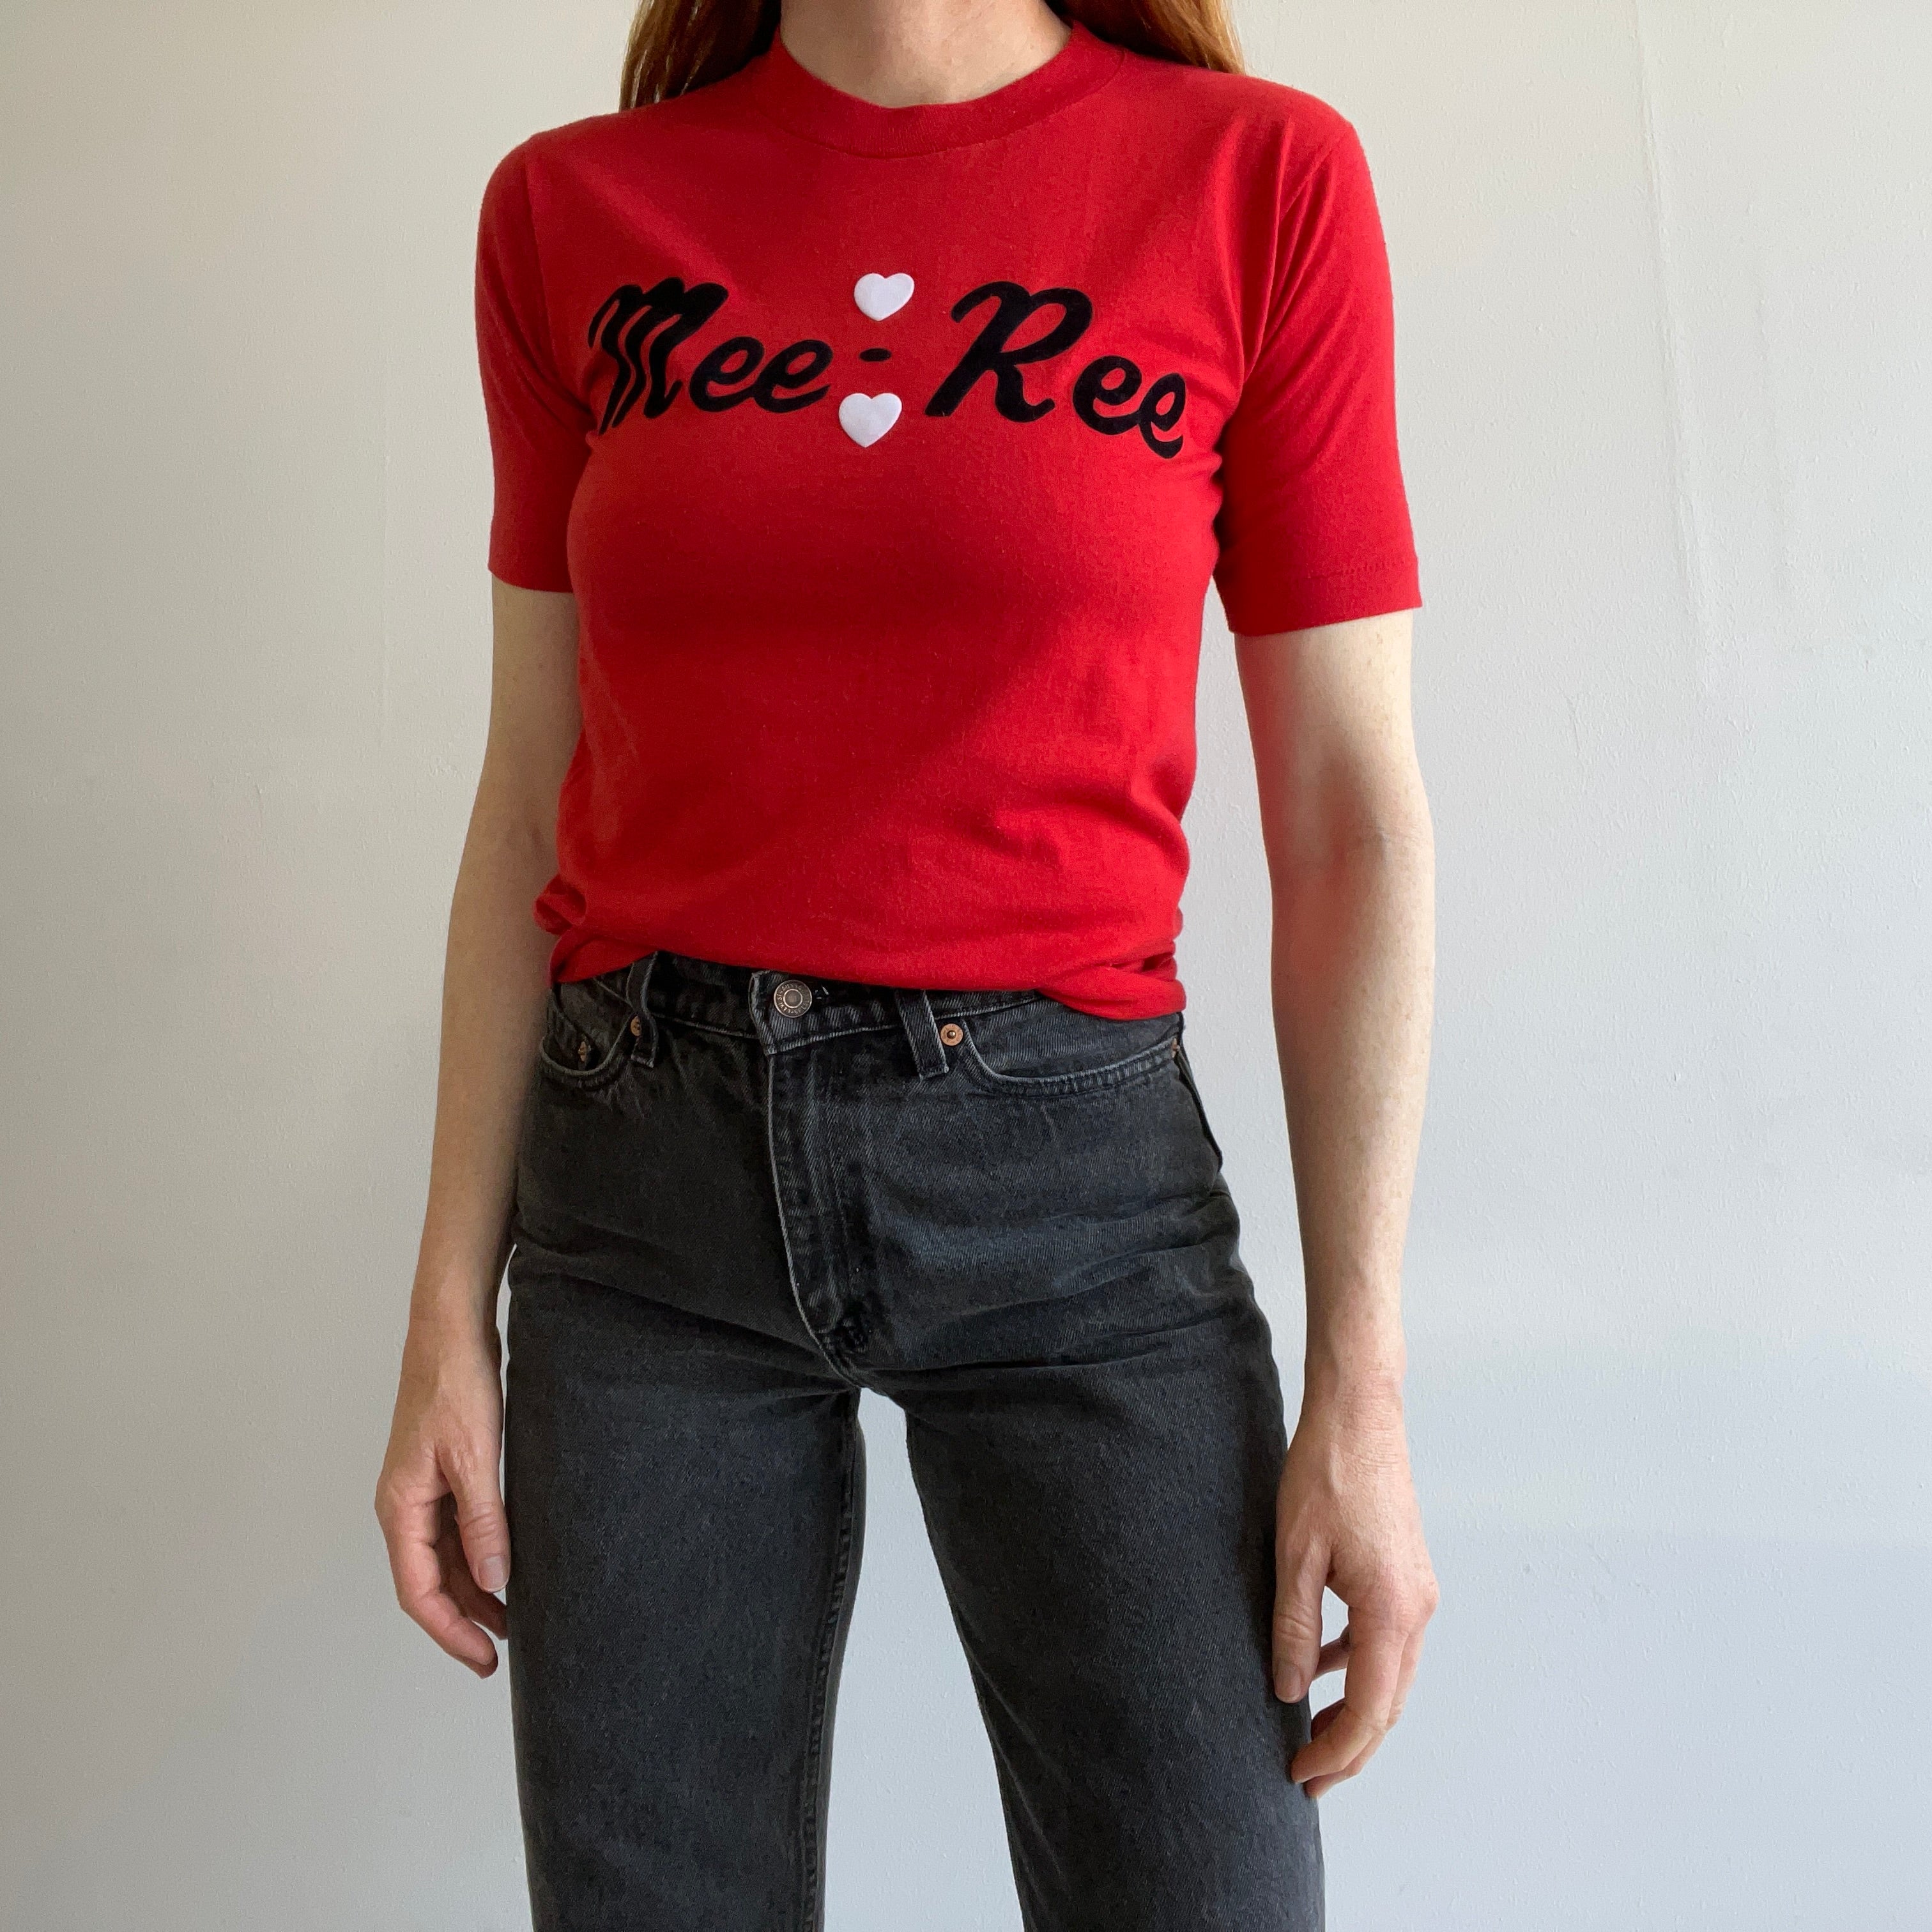 1980s Meee - Ree DIY T-Shirt